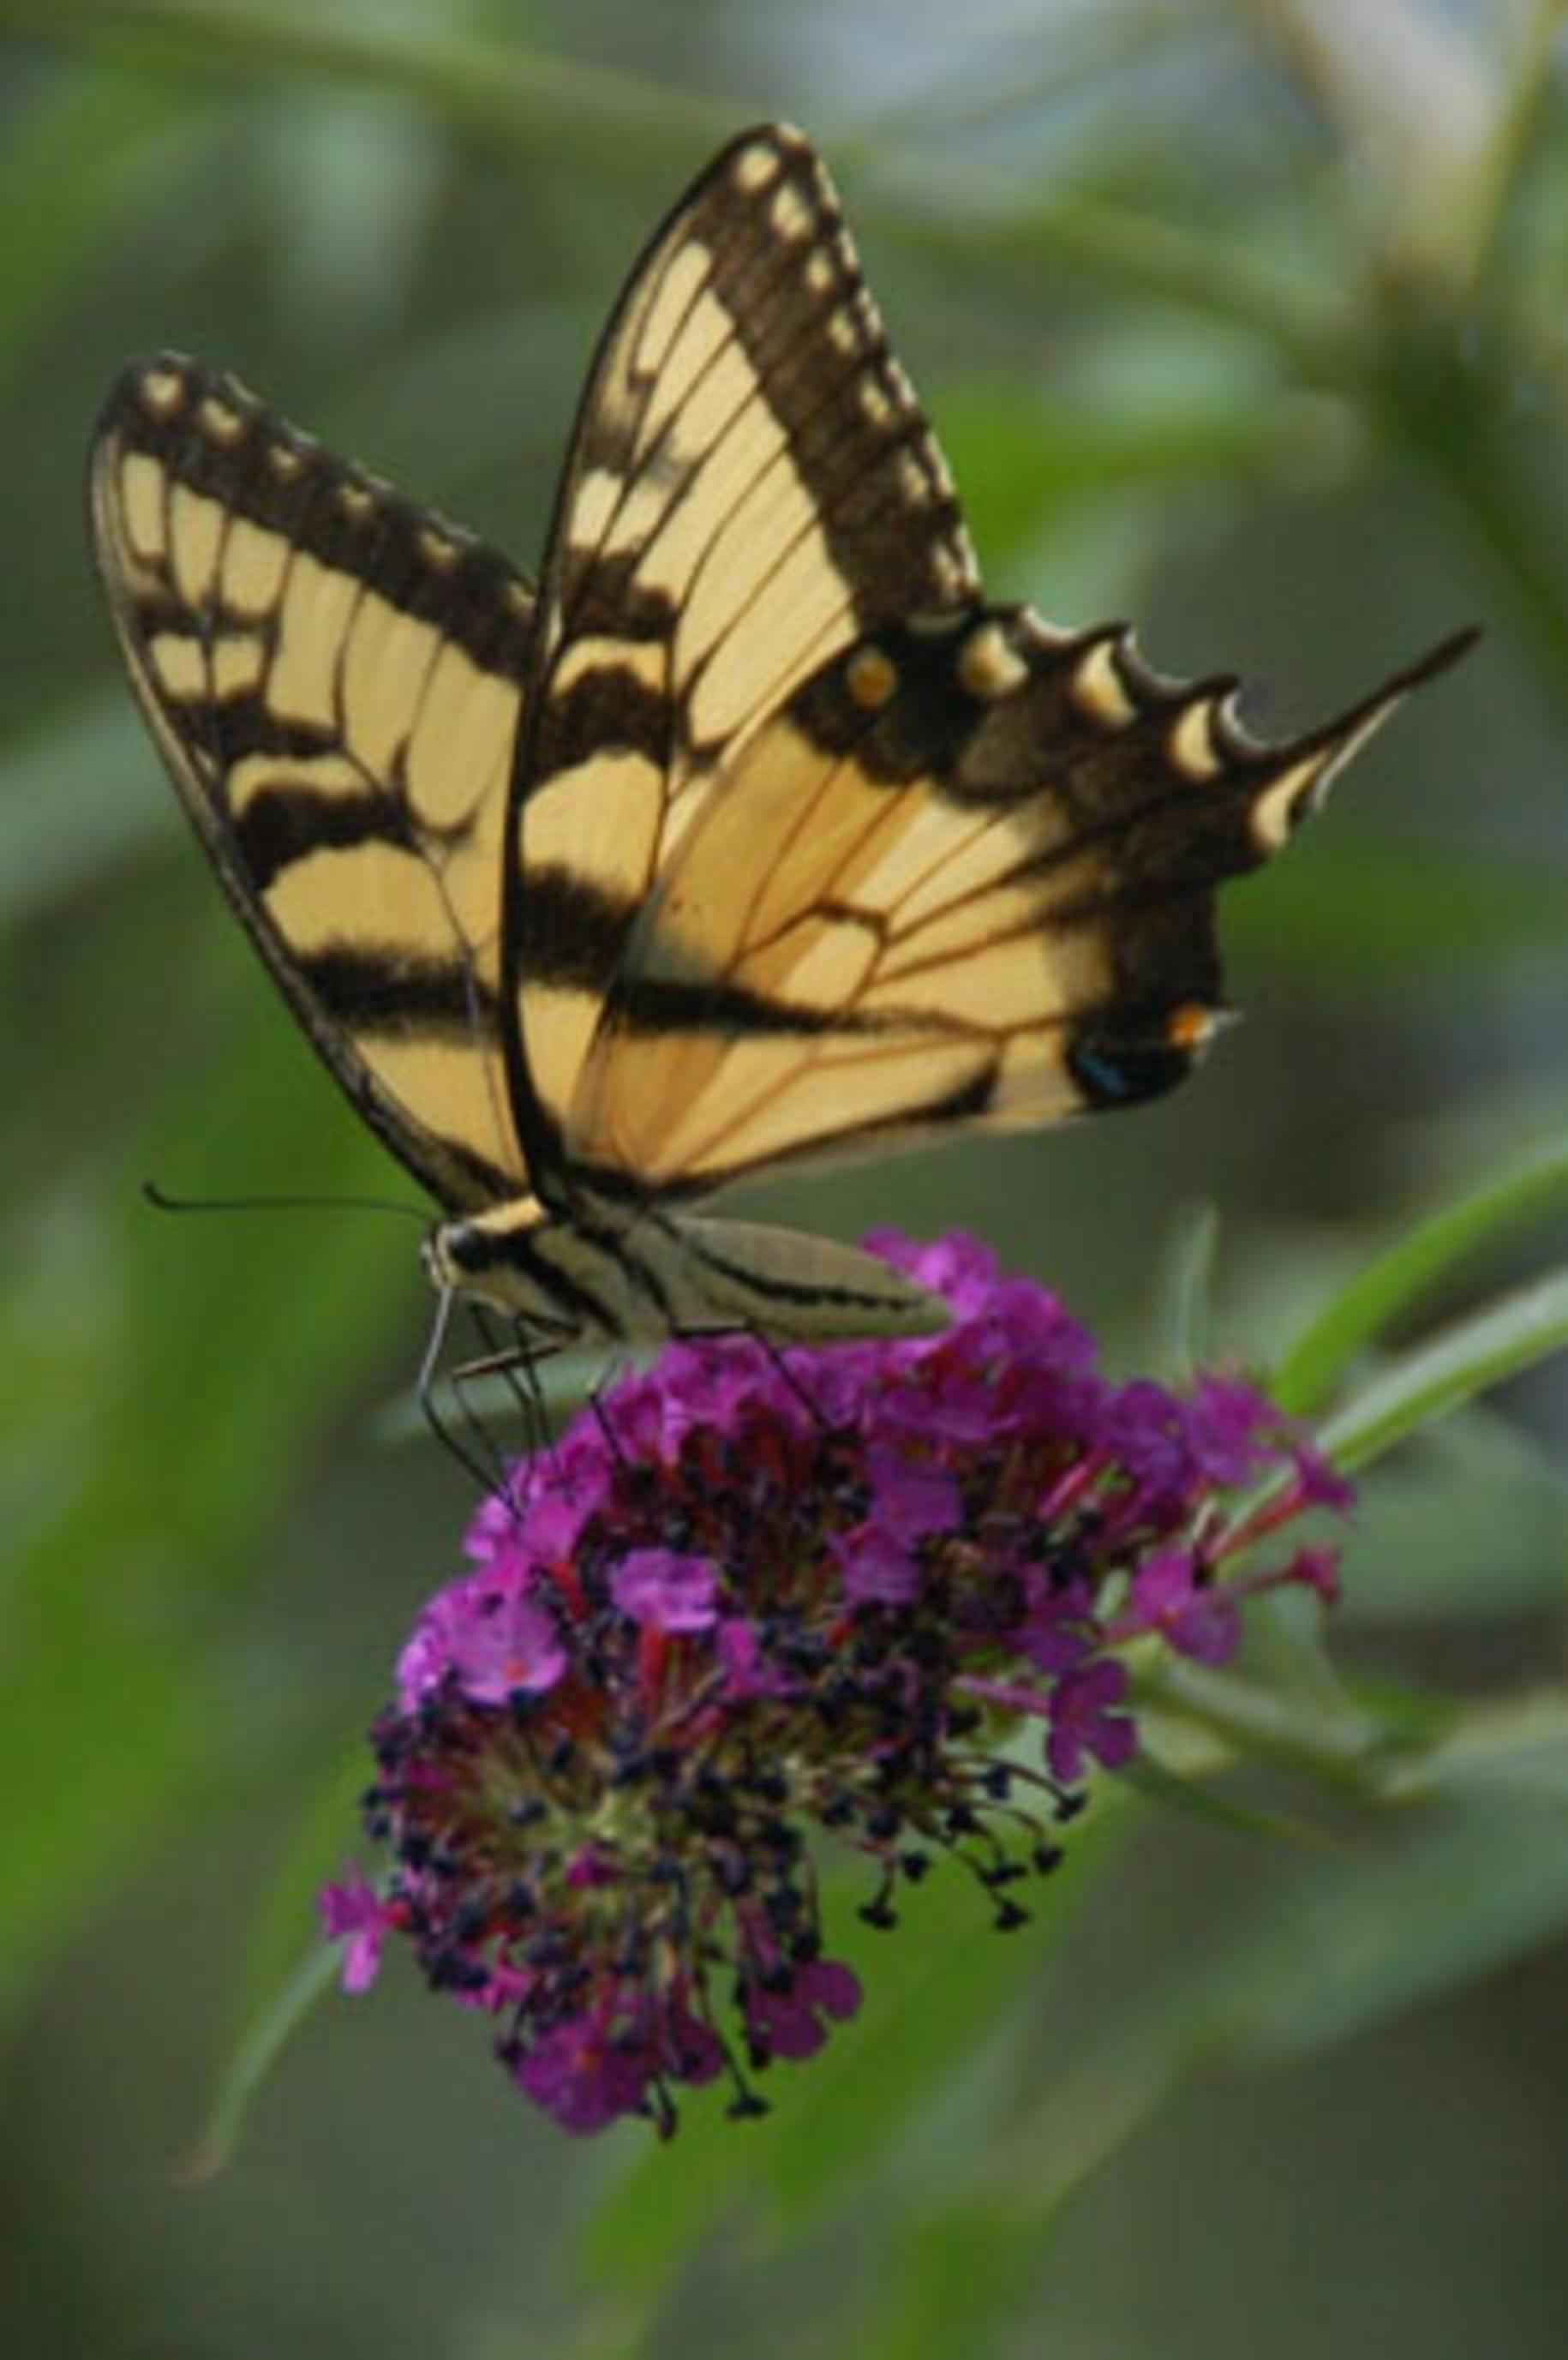 File:Butterfly perched on purple flower.jpg - Wikimedia Commons